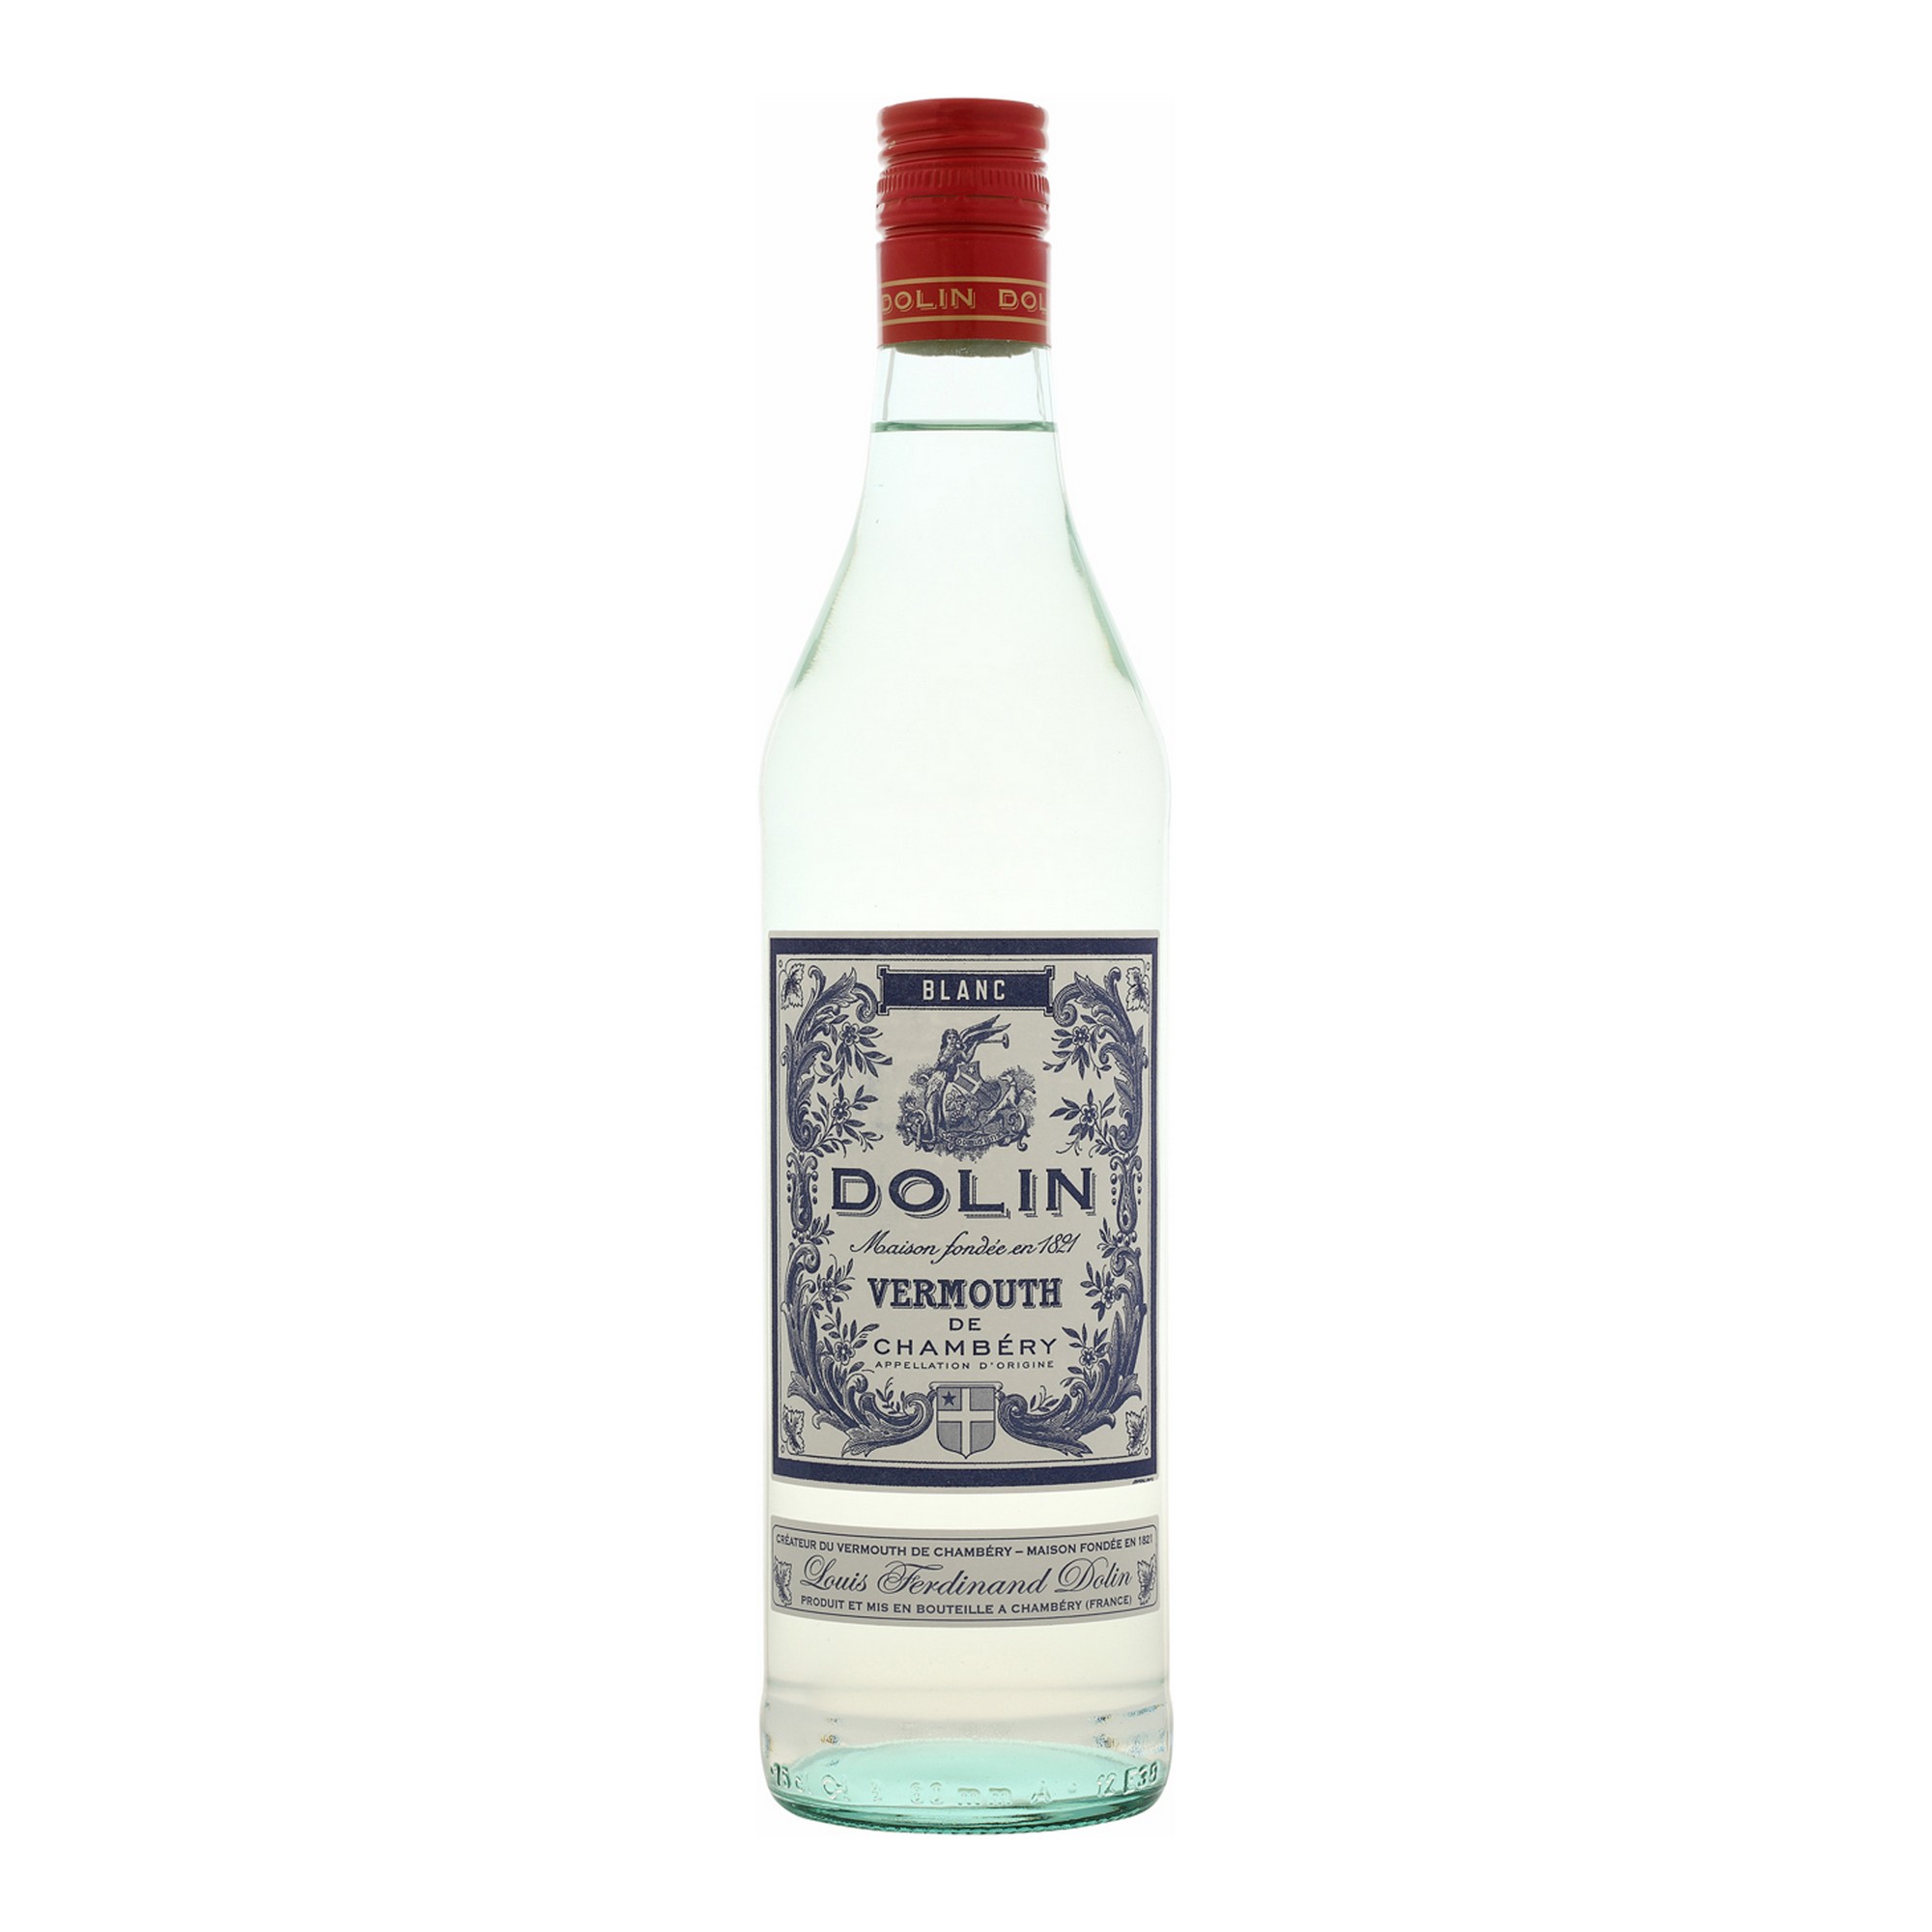 Dolin vermouth de chambéry blanc  16%  75cl